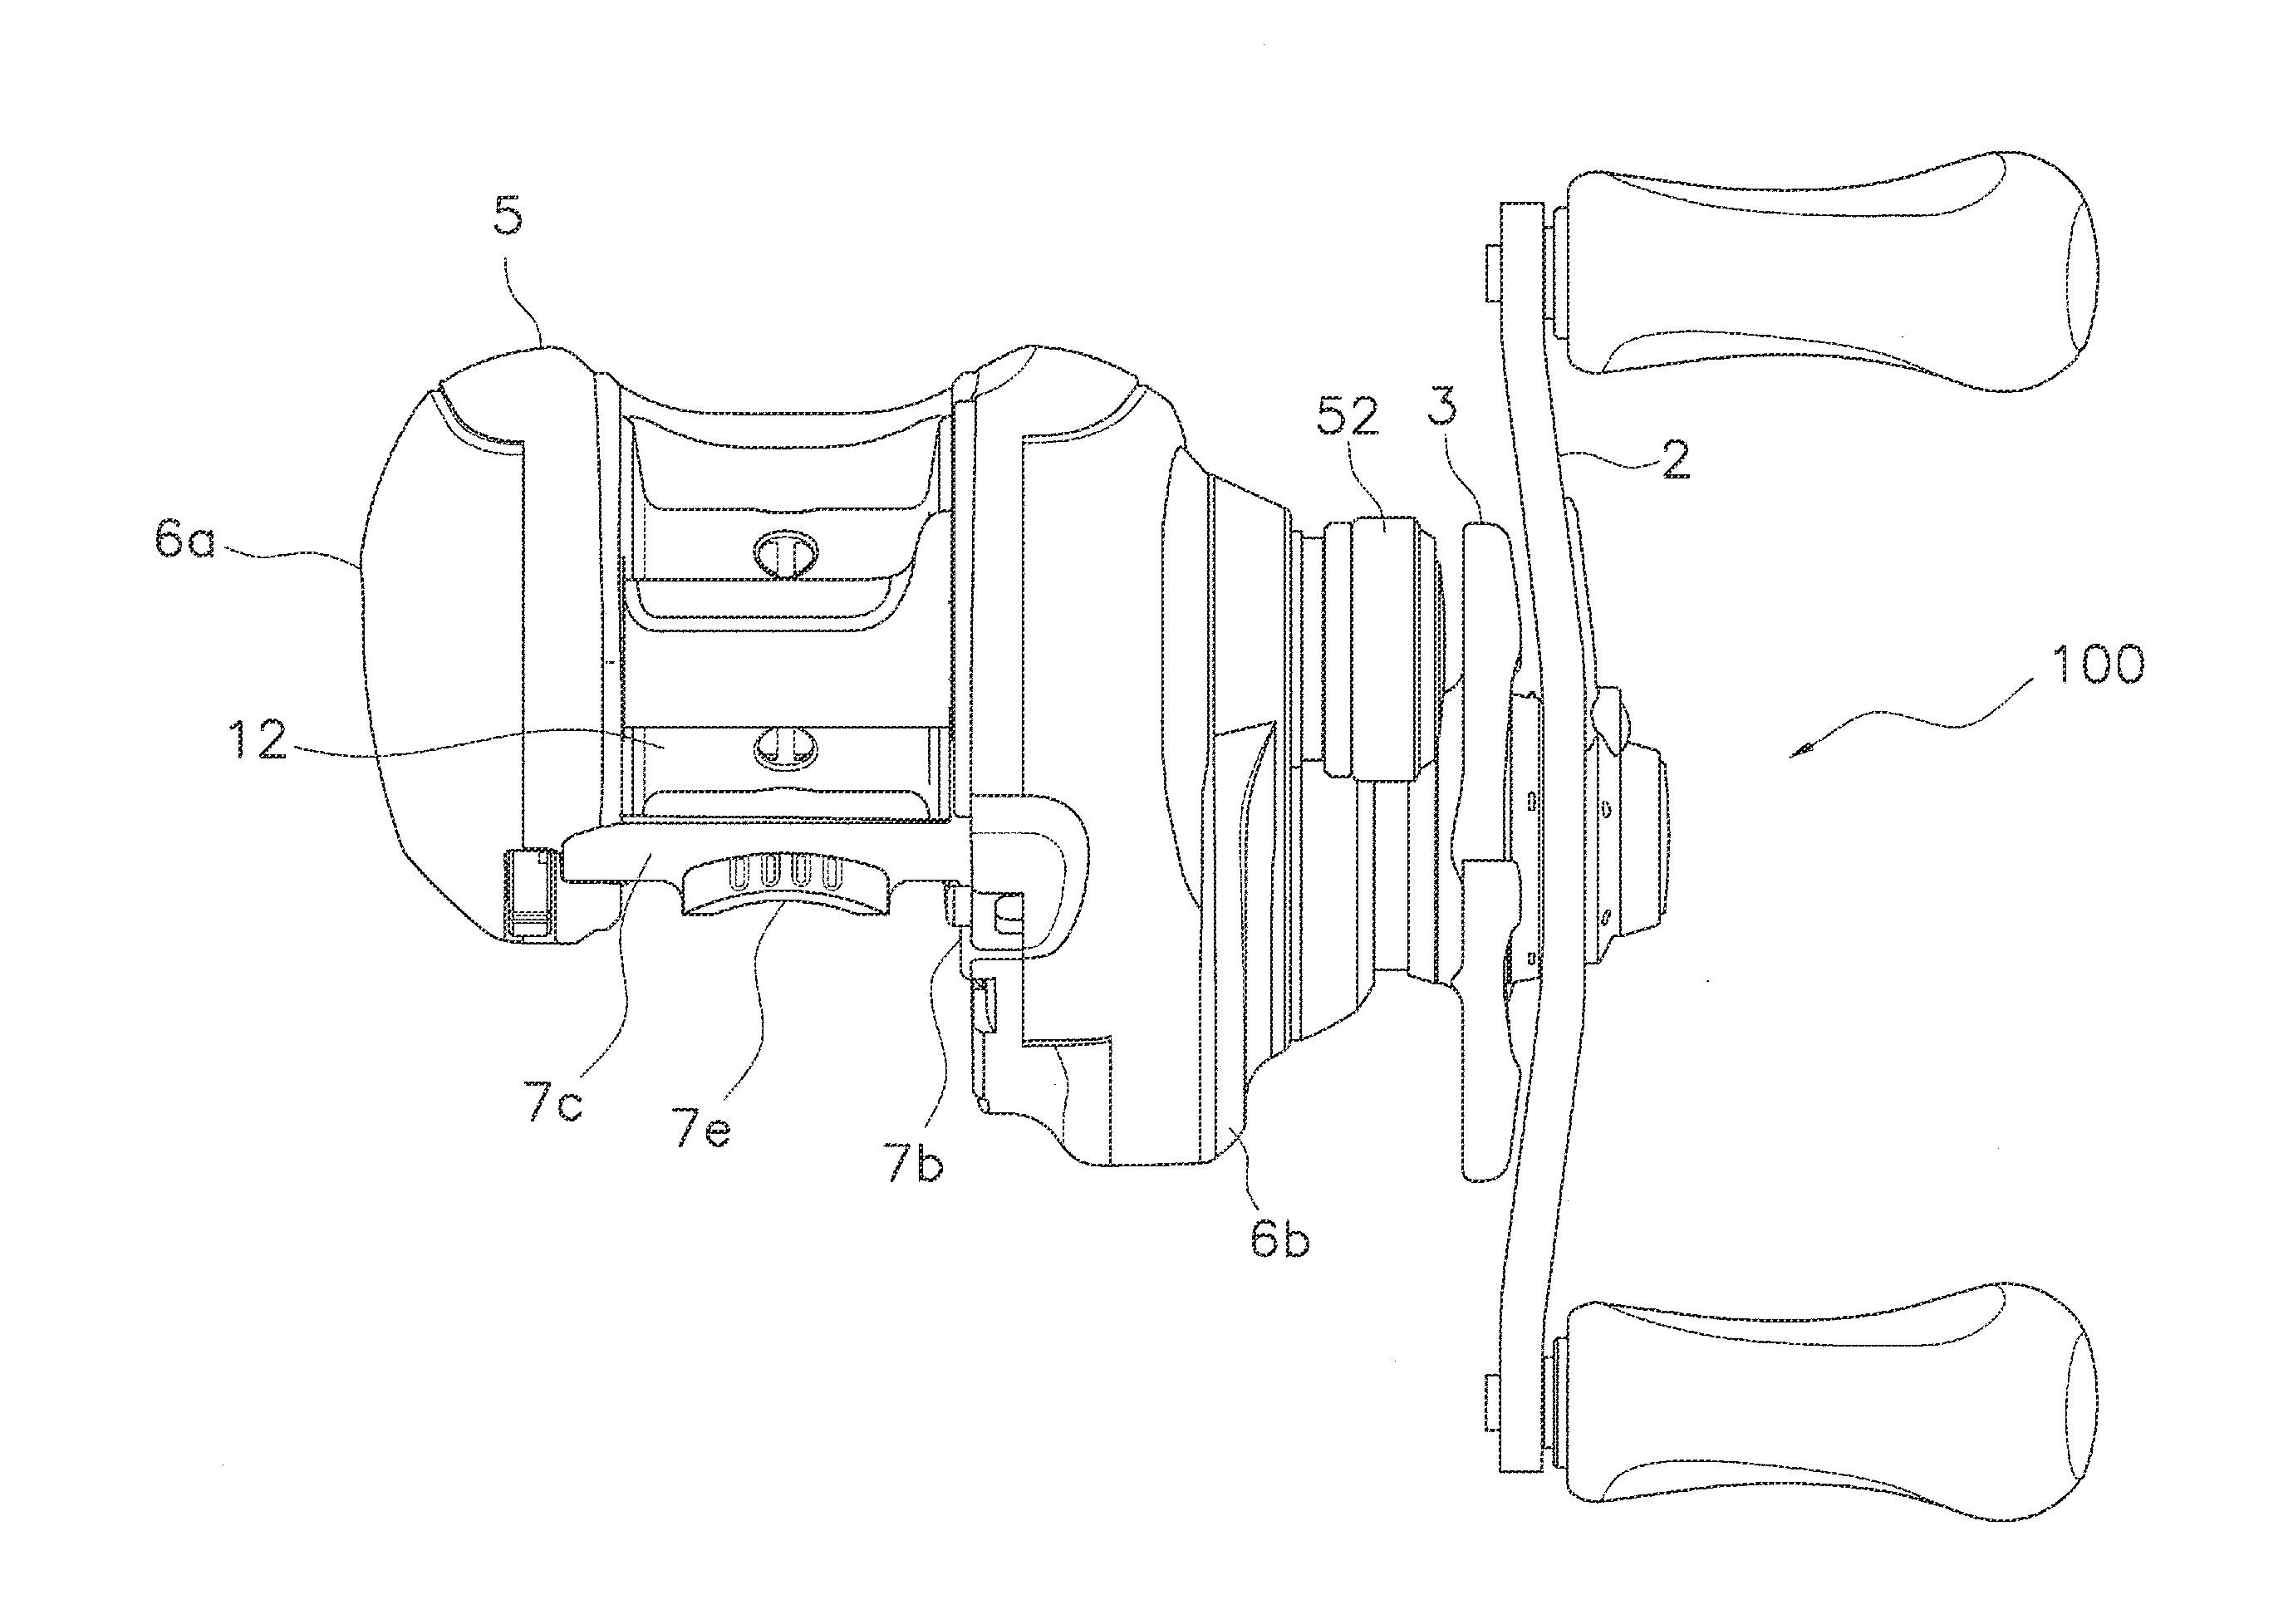 Dual-bearing reel pinion gear and dual-bearing reel